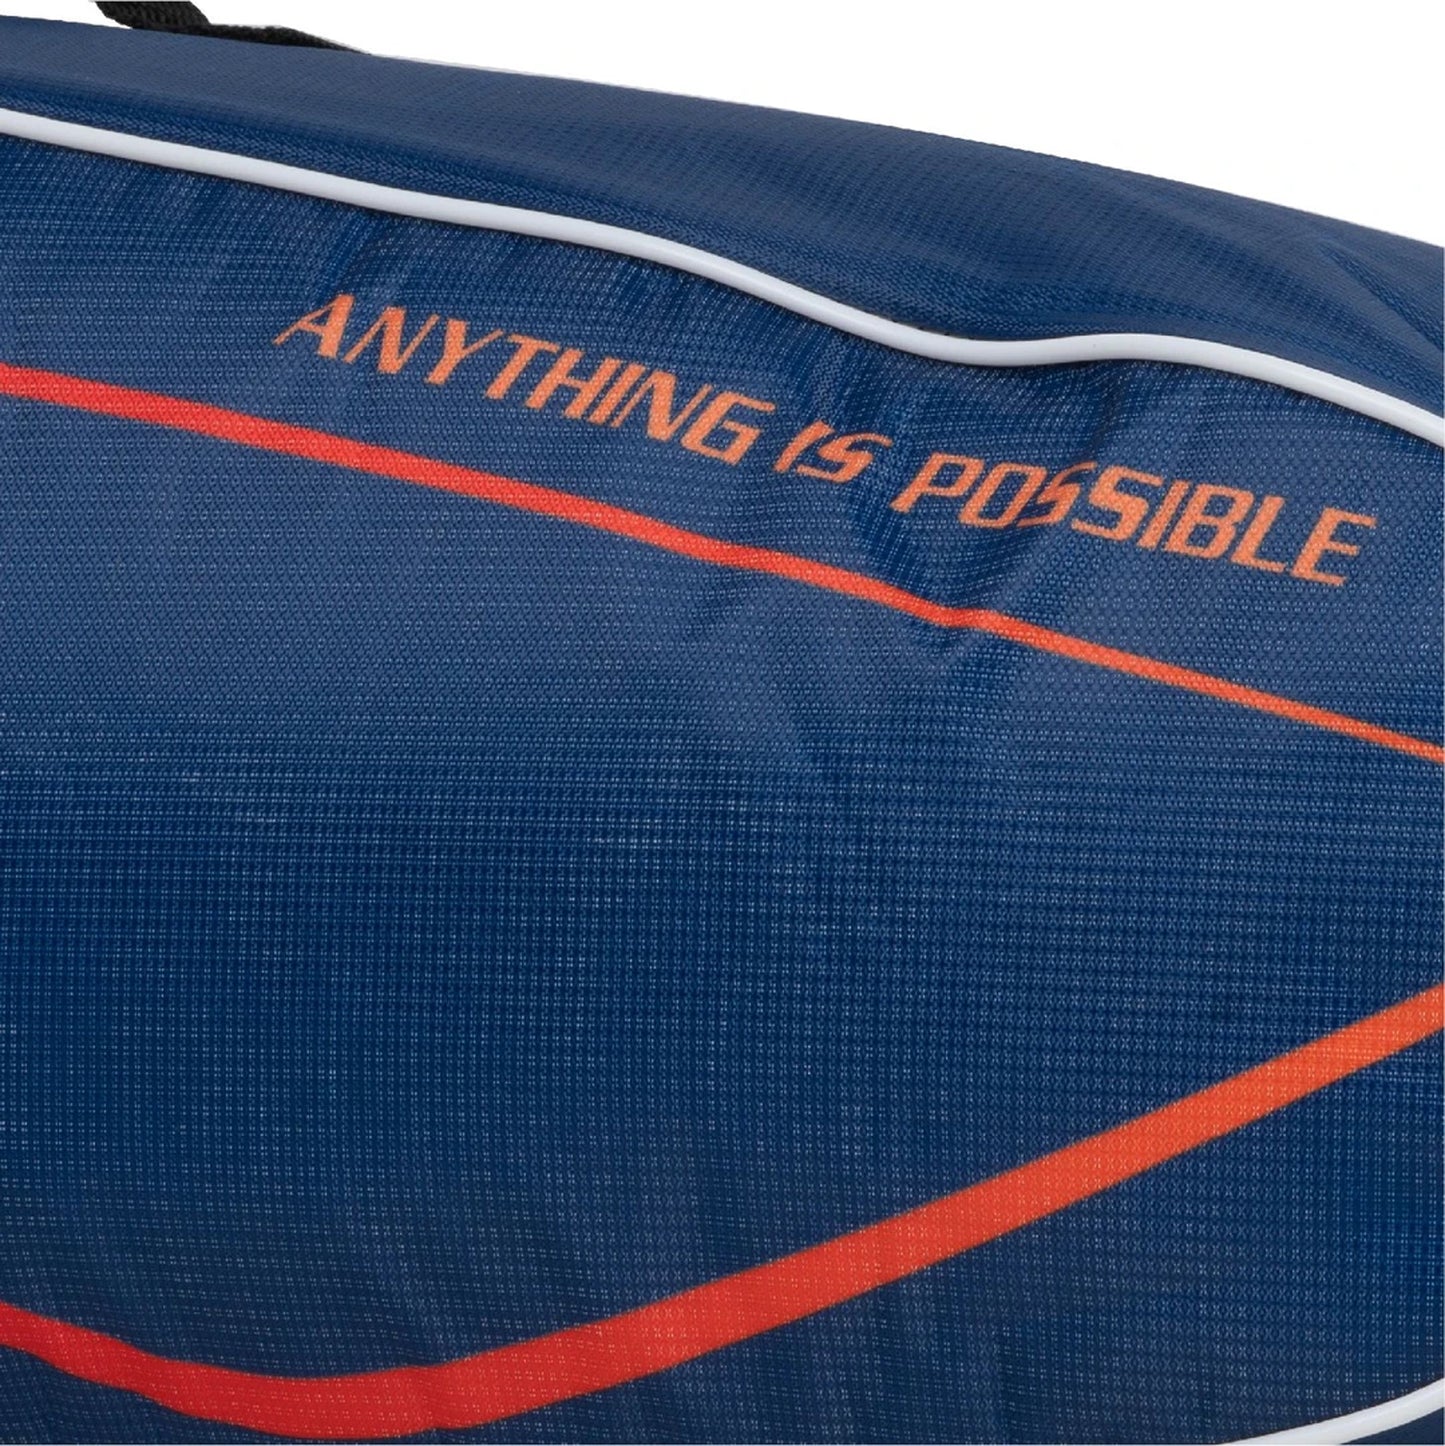 Li-Ning LN Track Badminton Kit Bag - Best Price online Prokicksports.com